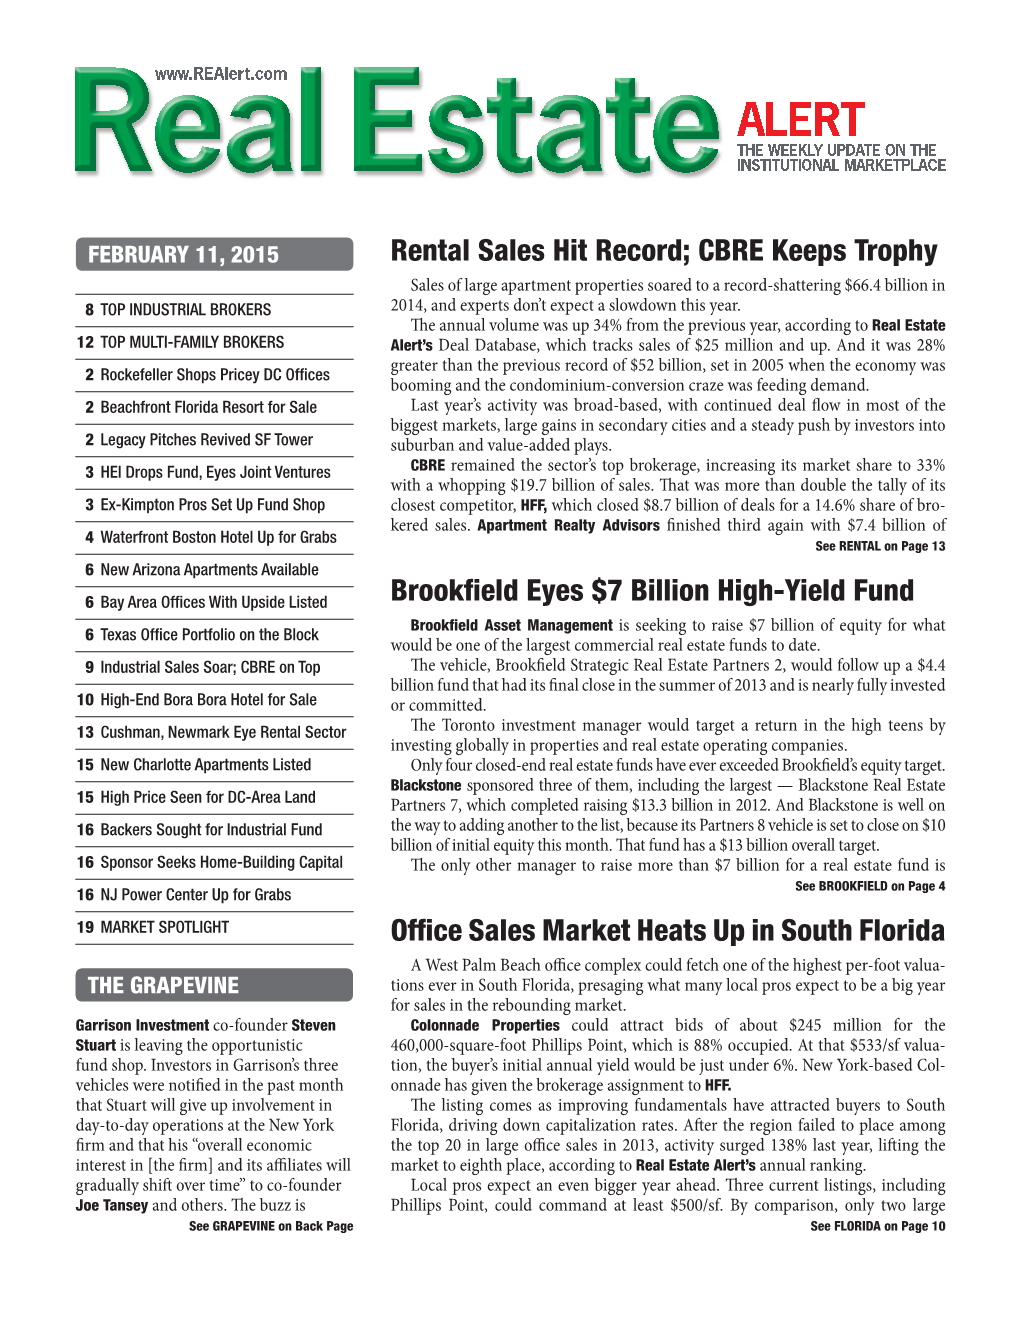 Real Estate Alert’S Annual Ranking